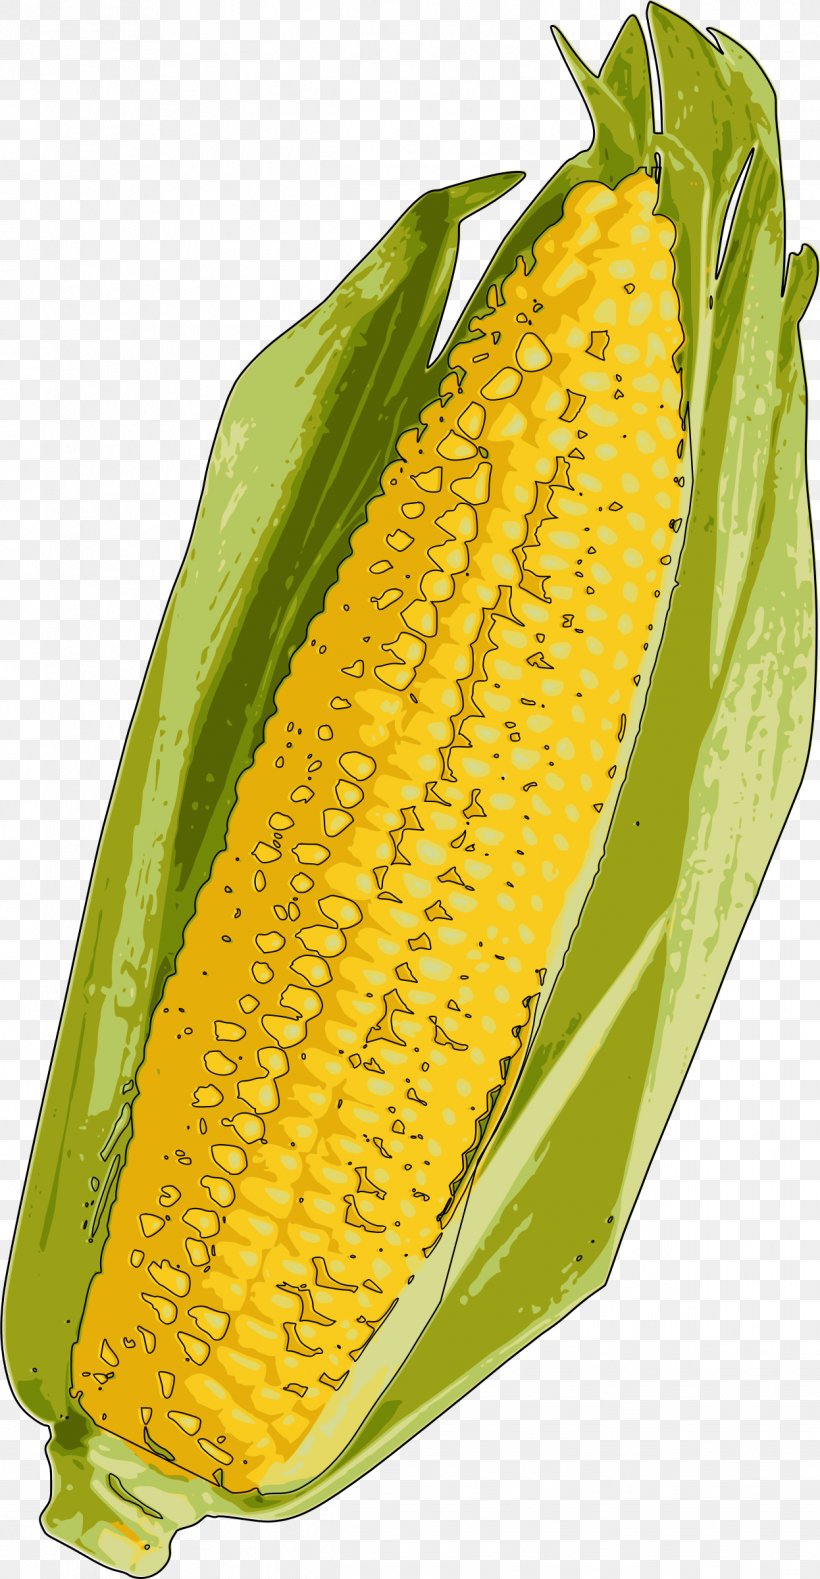 Corn On The Cob Popcorn Candy Corn Corn Flakes Maize, PNG, 1246x2400px, Corn On The Cob, Butter, Candy Corn, Commodity, Corn Flakes Download Free